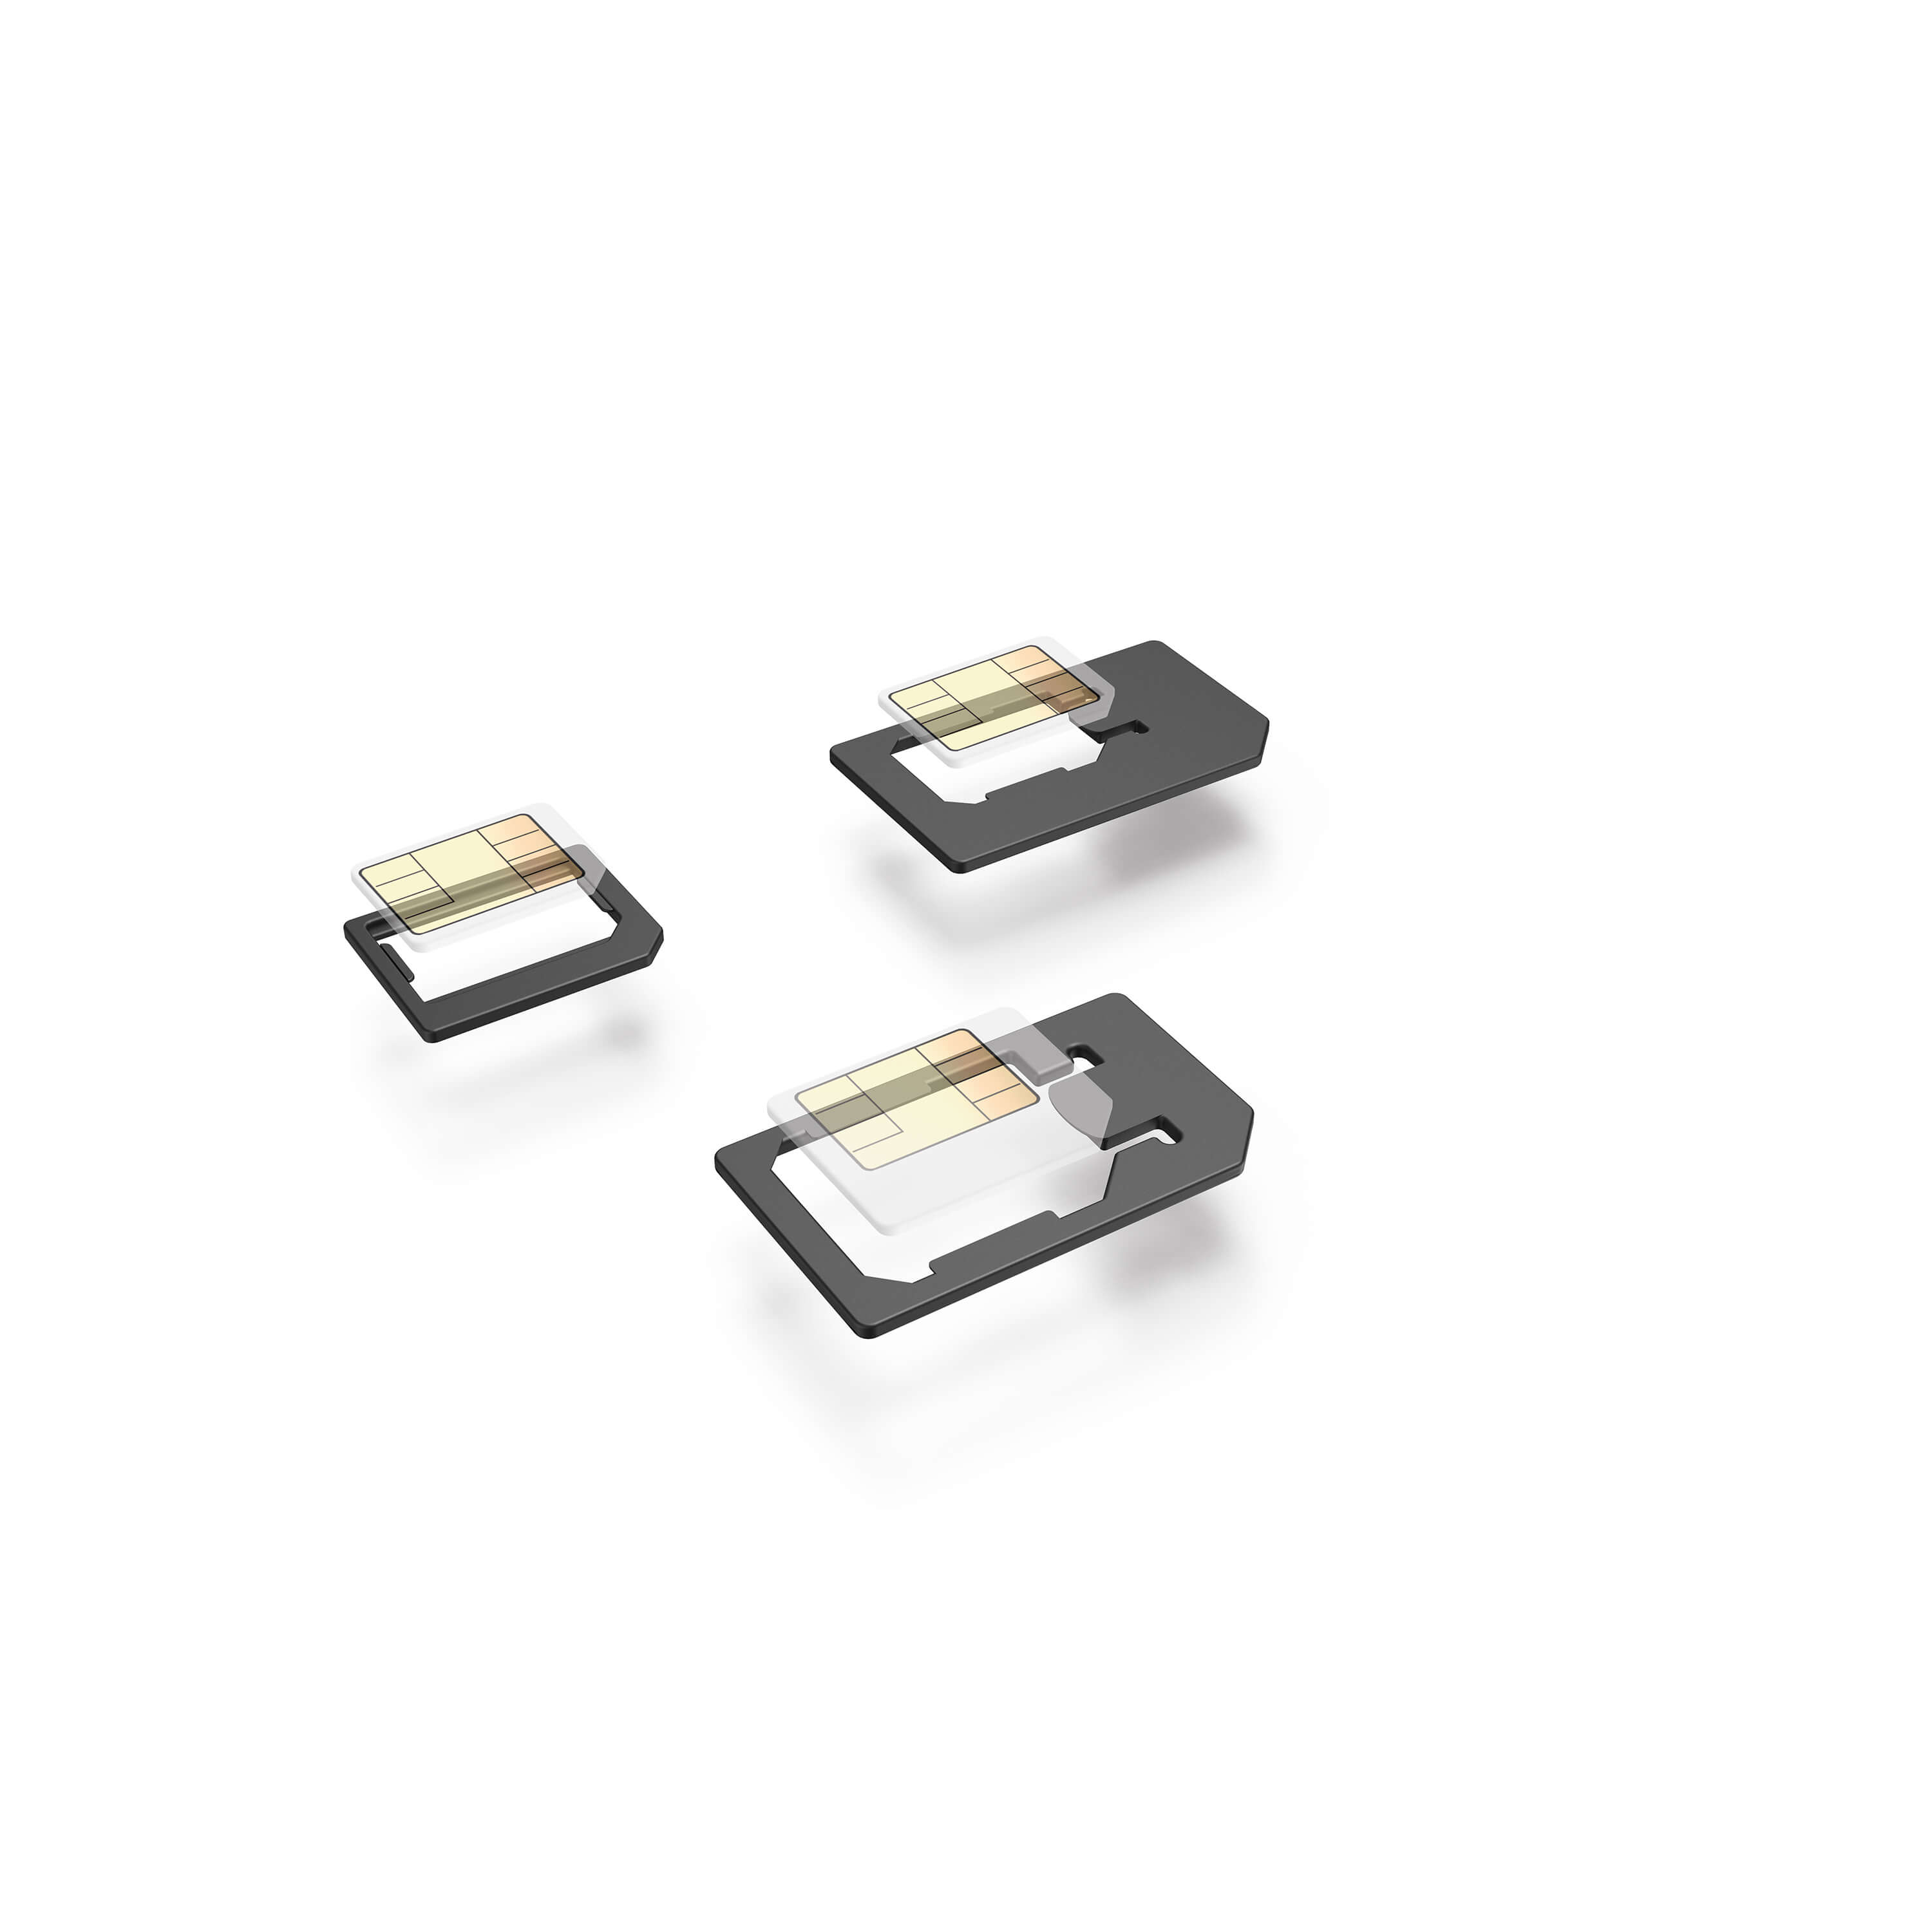 HAMA Adapter for Nano/Micro SIM/SI M Cards